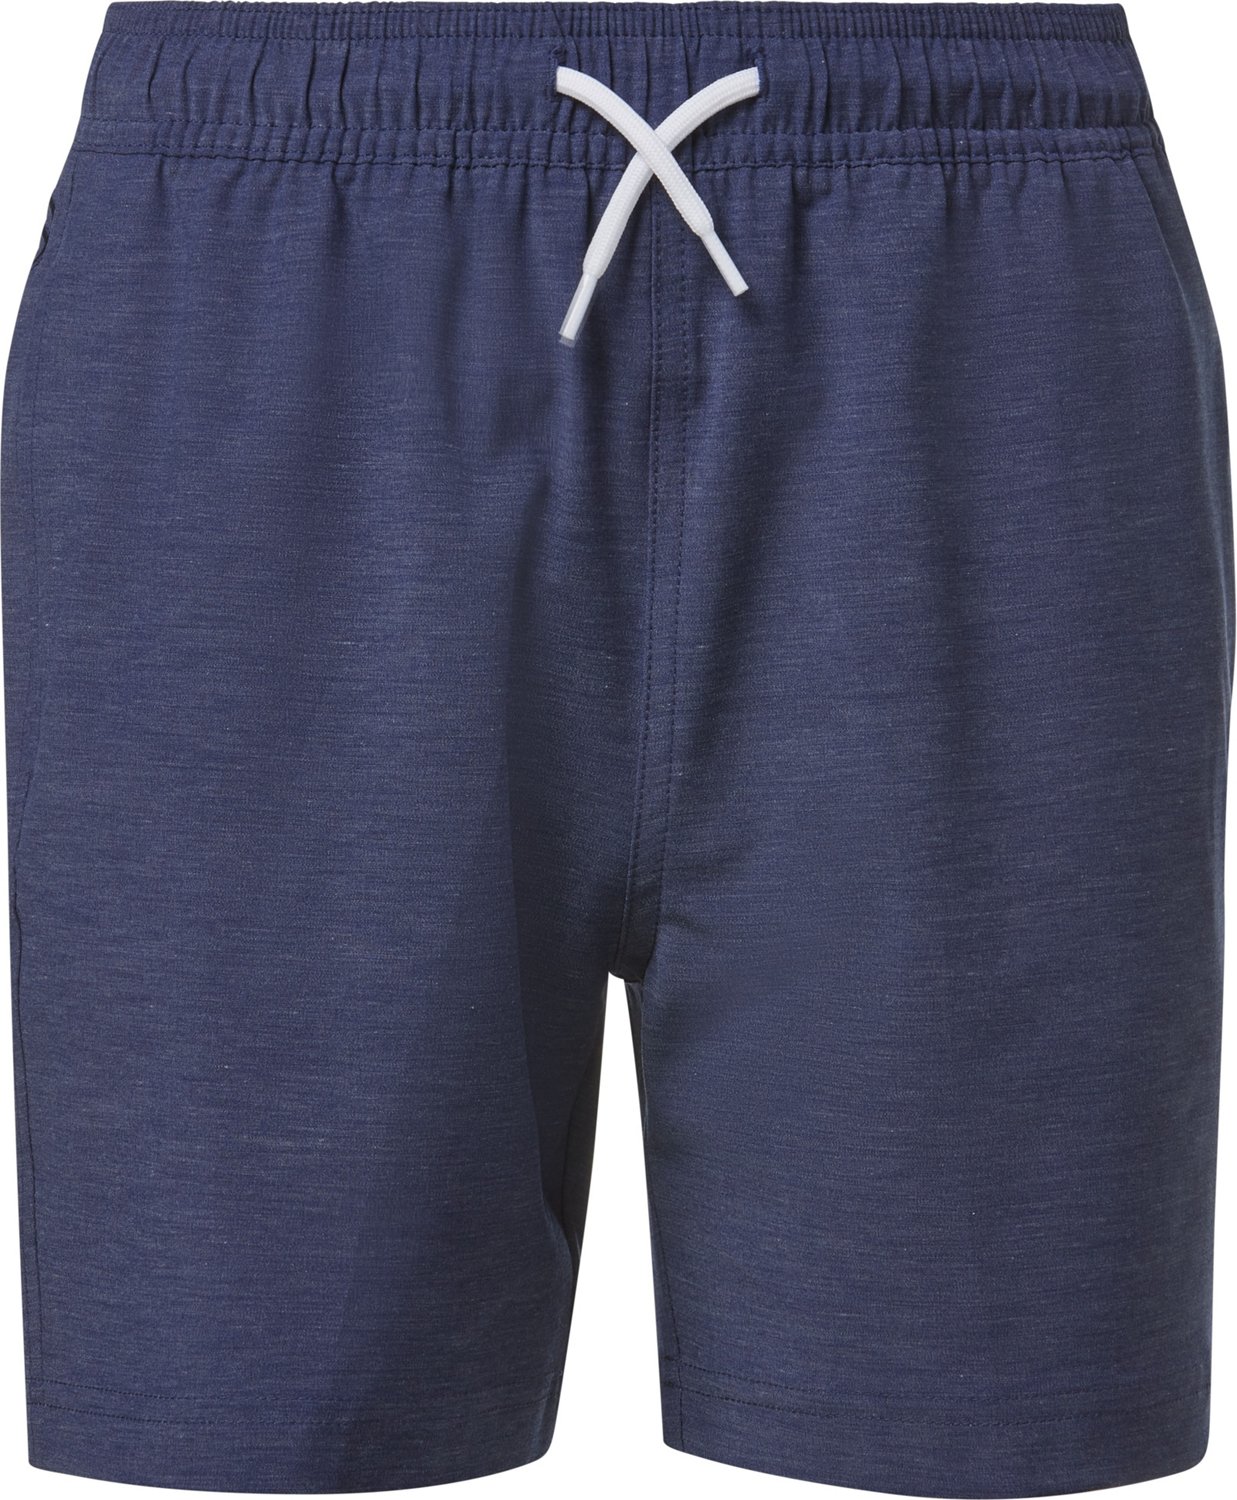 Magellan Men's Blue Specialized Fishing Shorts w/Mesh Lining